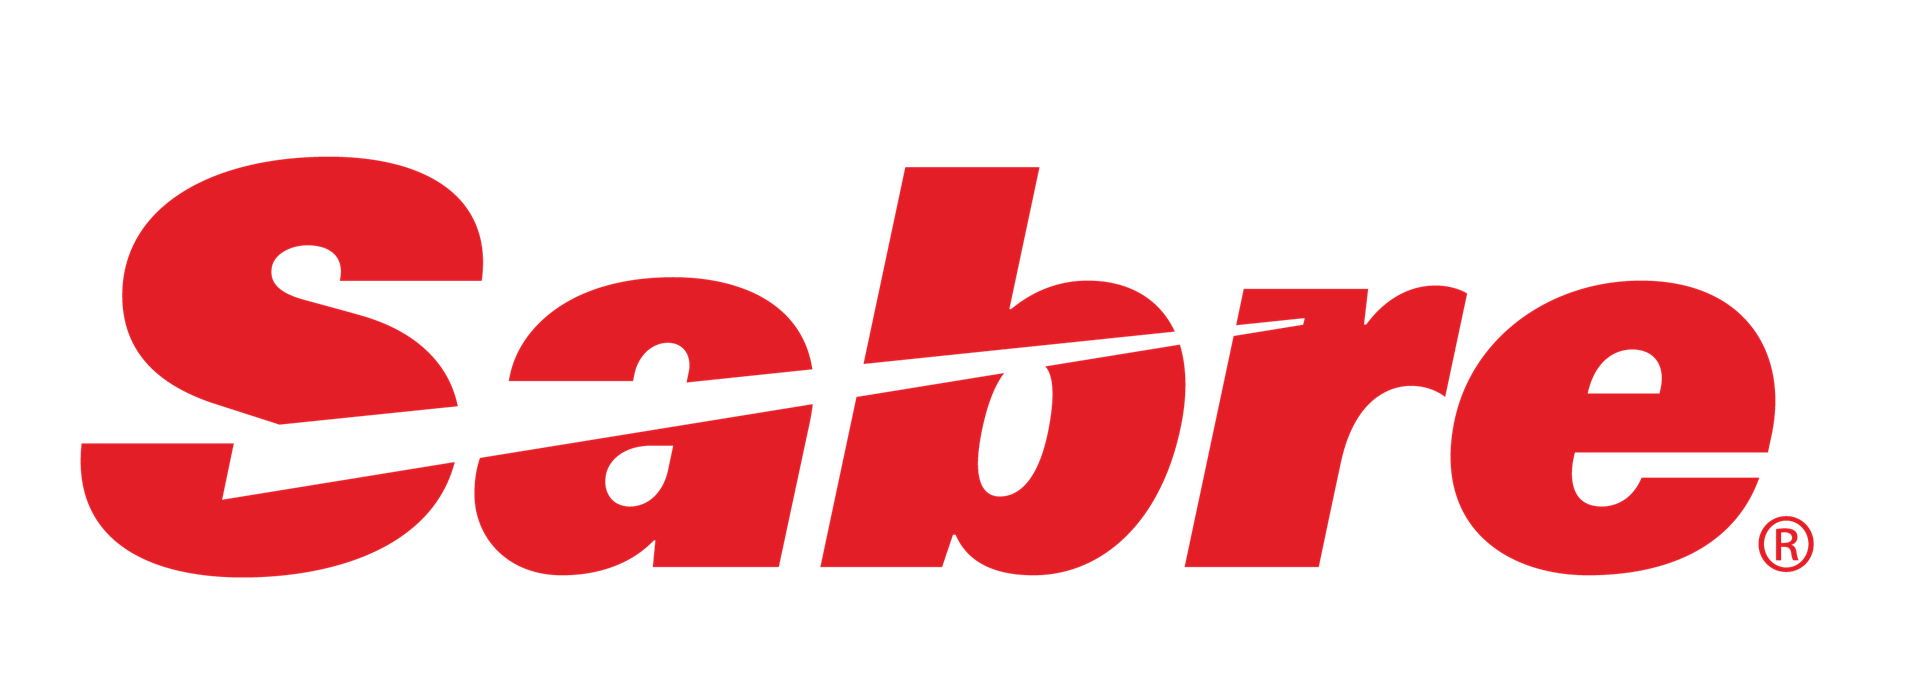 Aa.com Logo - AGIFORS Management SG Meeting 2018